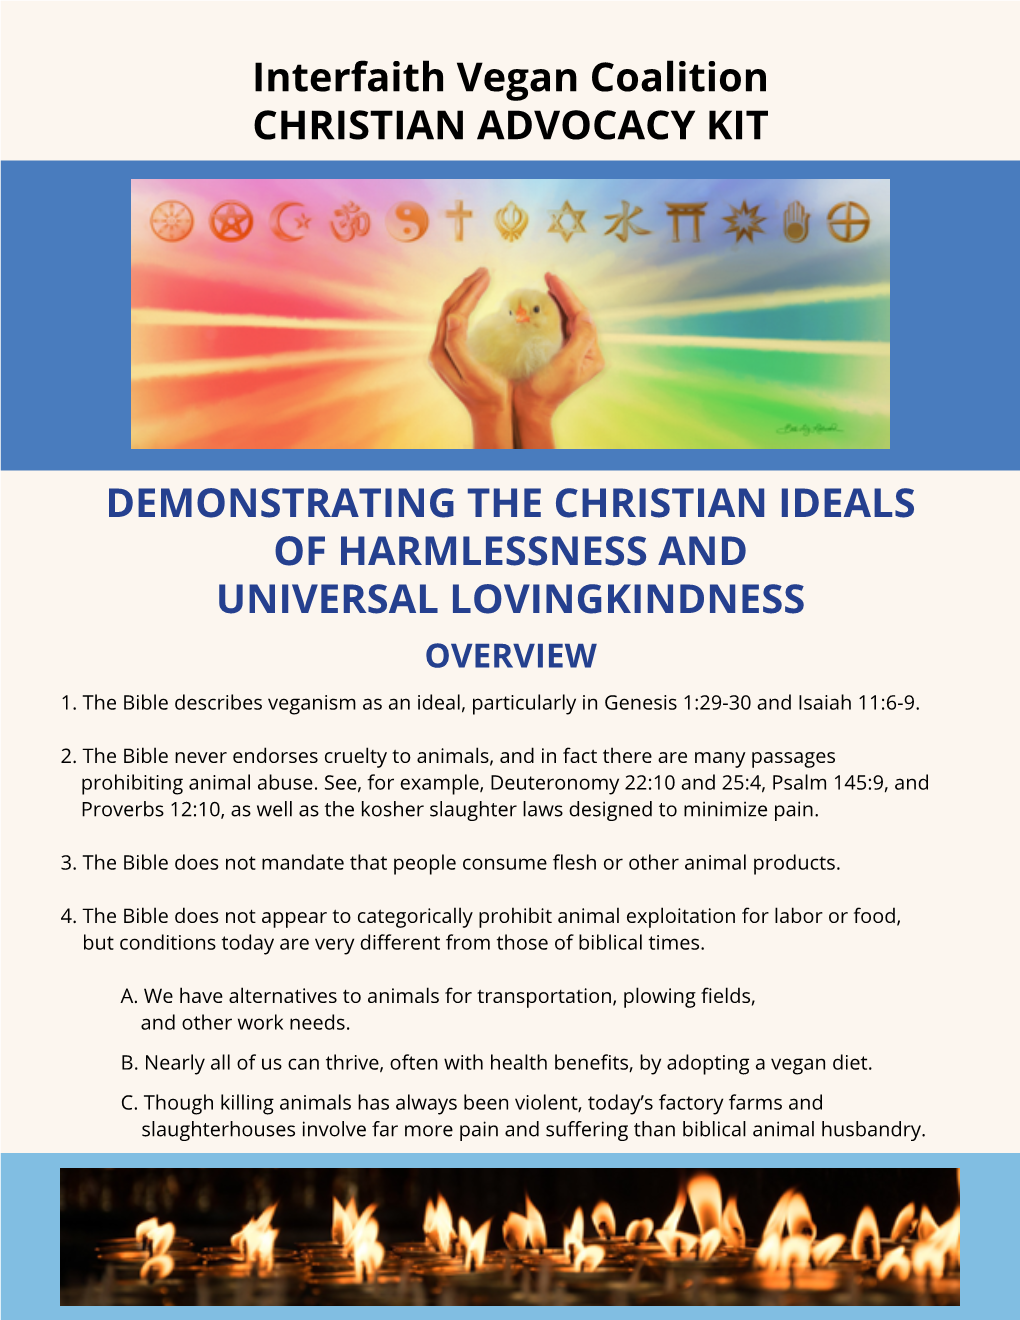 Interfaith Vegan Coalition Christian Advocacy Kit Demonstrating the Christian Ideals of Harmlessness and Universal Lovingkindnes